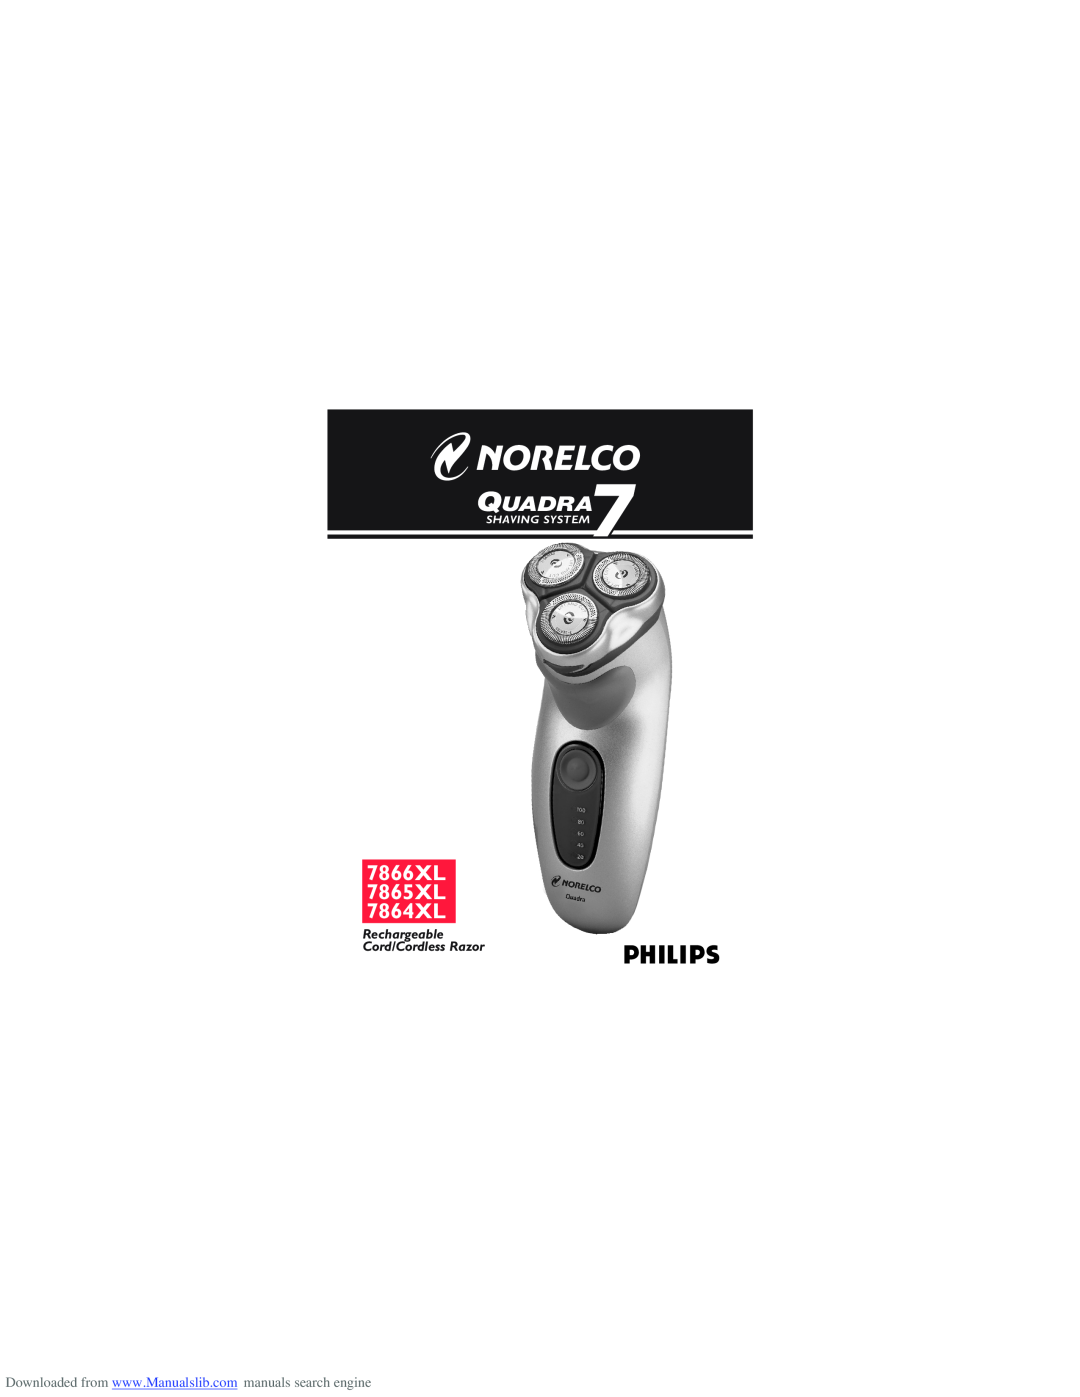 Philips manual 7866XL 7865XL 7864XL, QUADRA7, Rechargeable Cord/Cordless Razor, Shaving System 